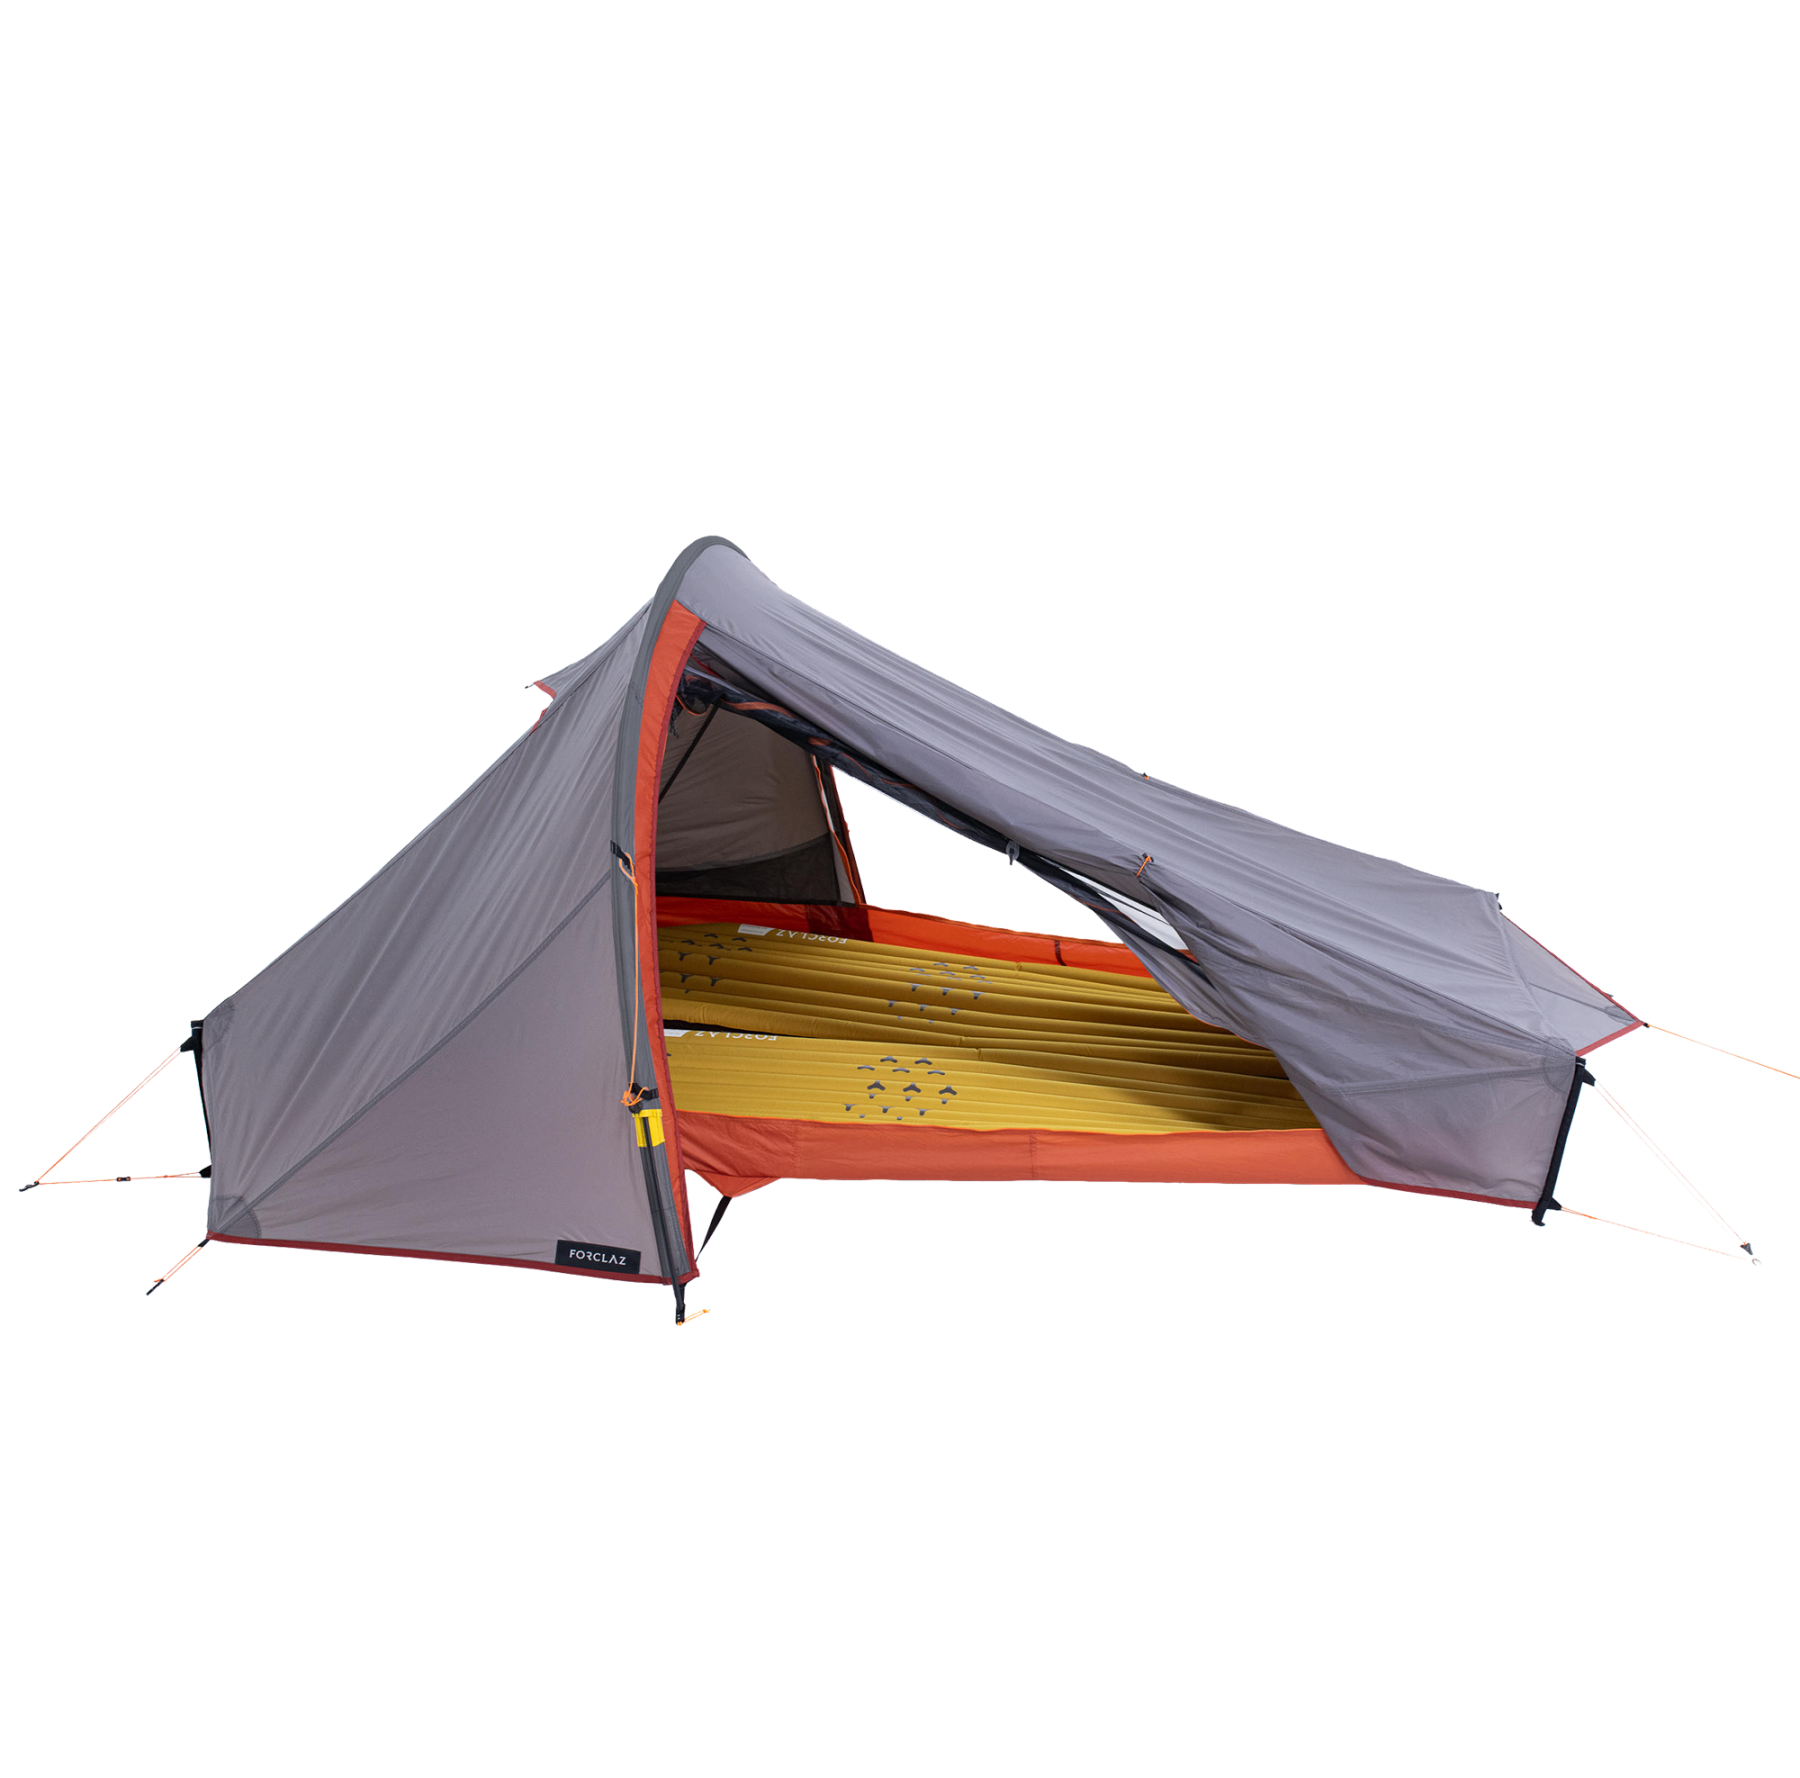 MT900 Trekking Tent: instructions, assembly, repair